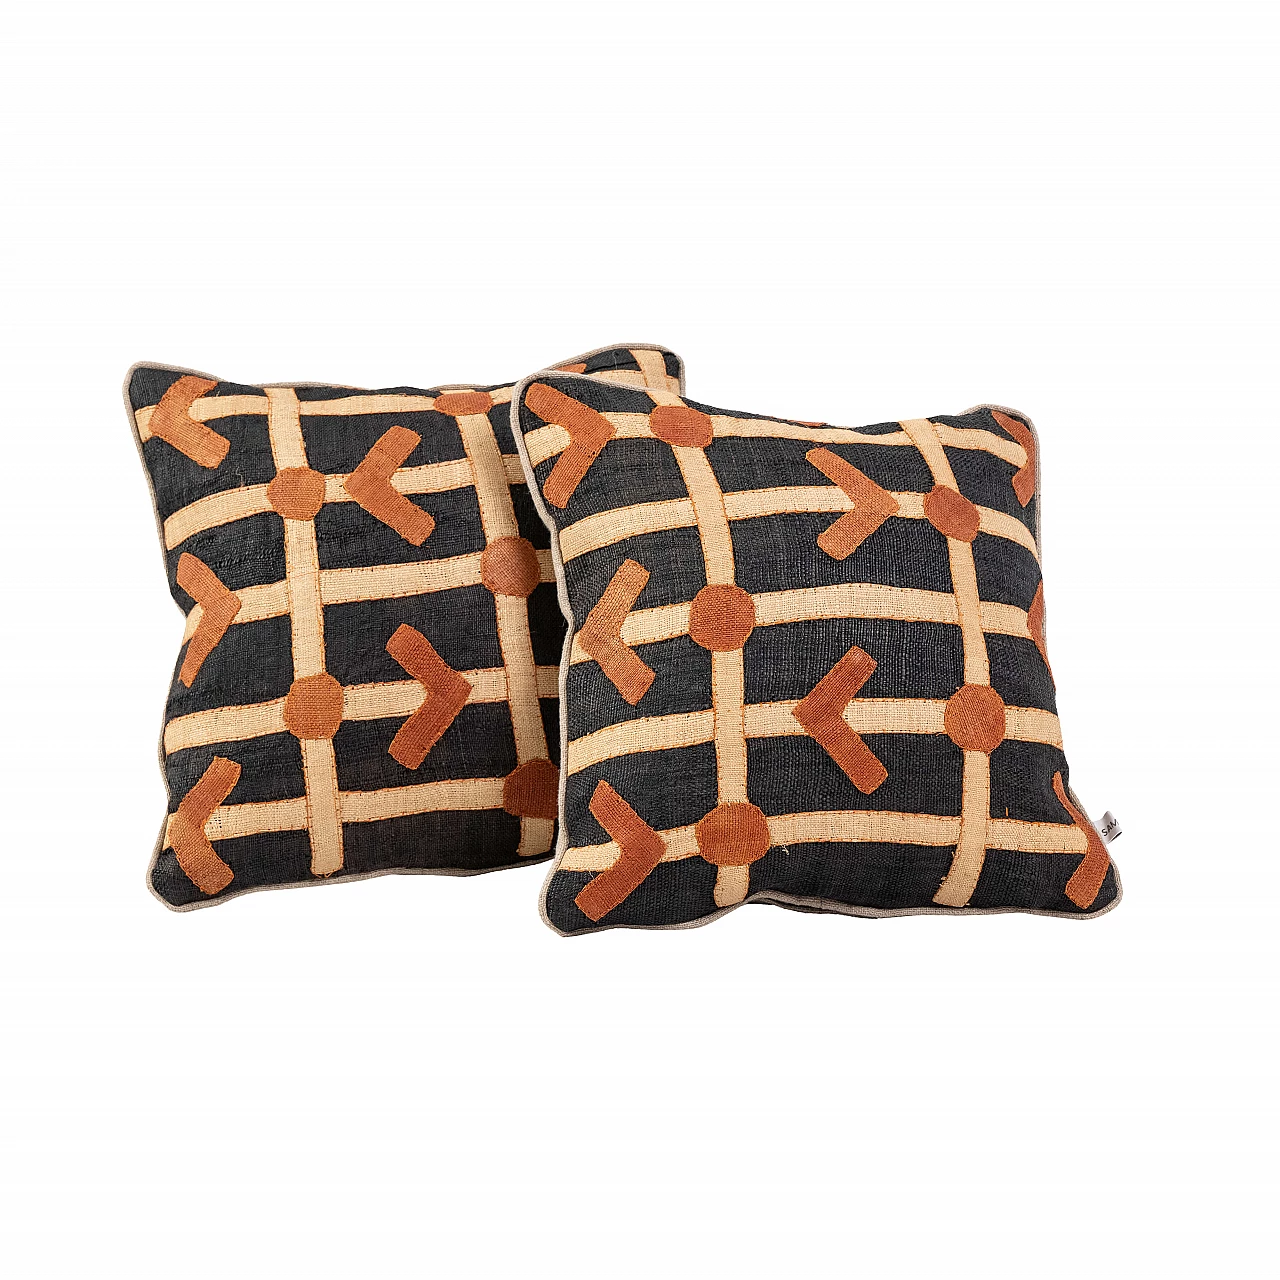 Eyebrow pattern kuba pillows 1107621